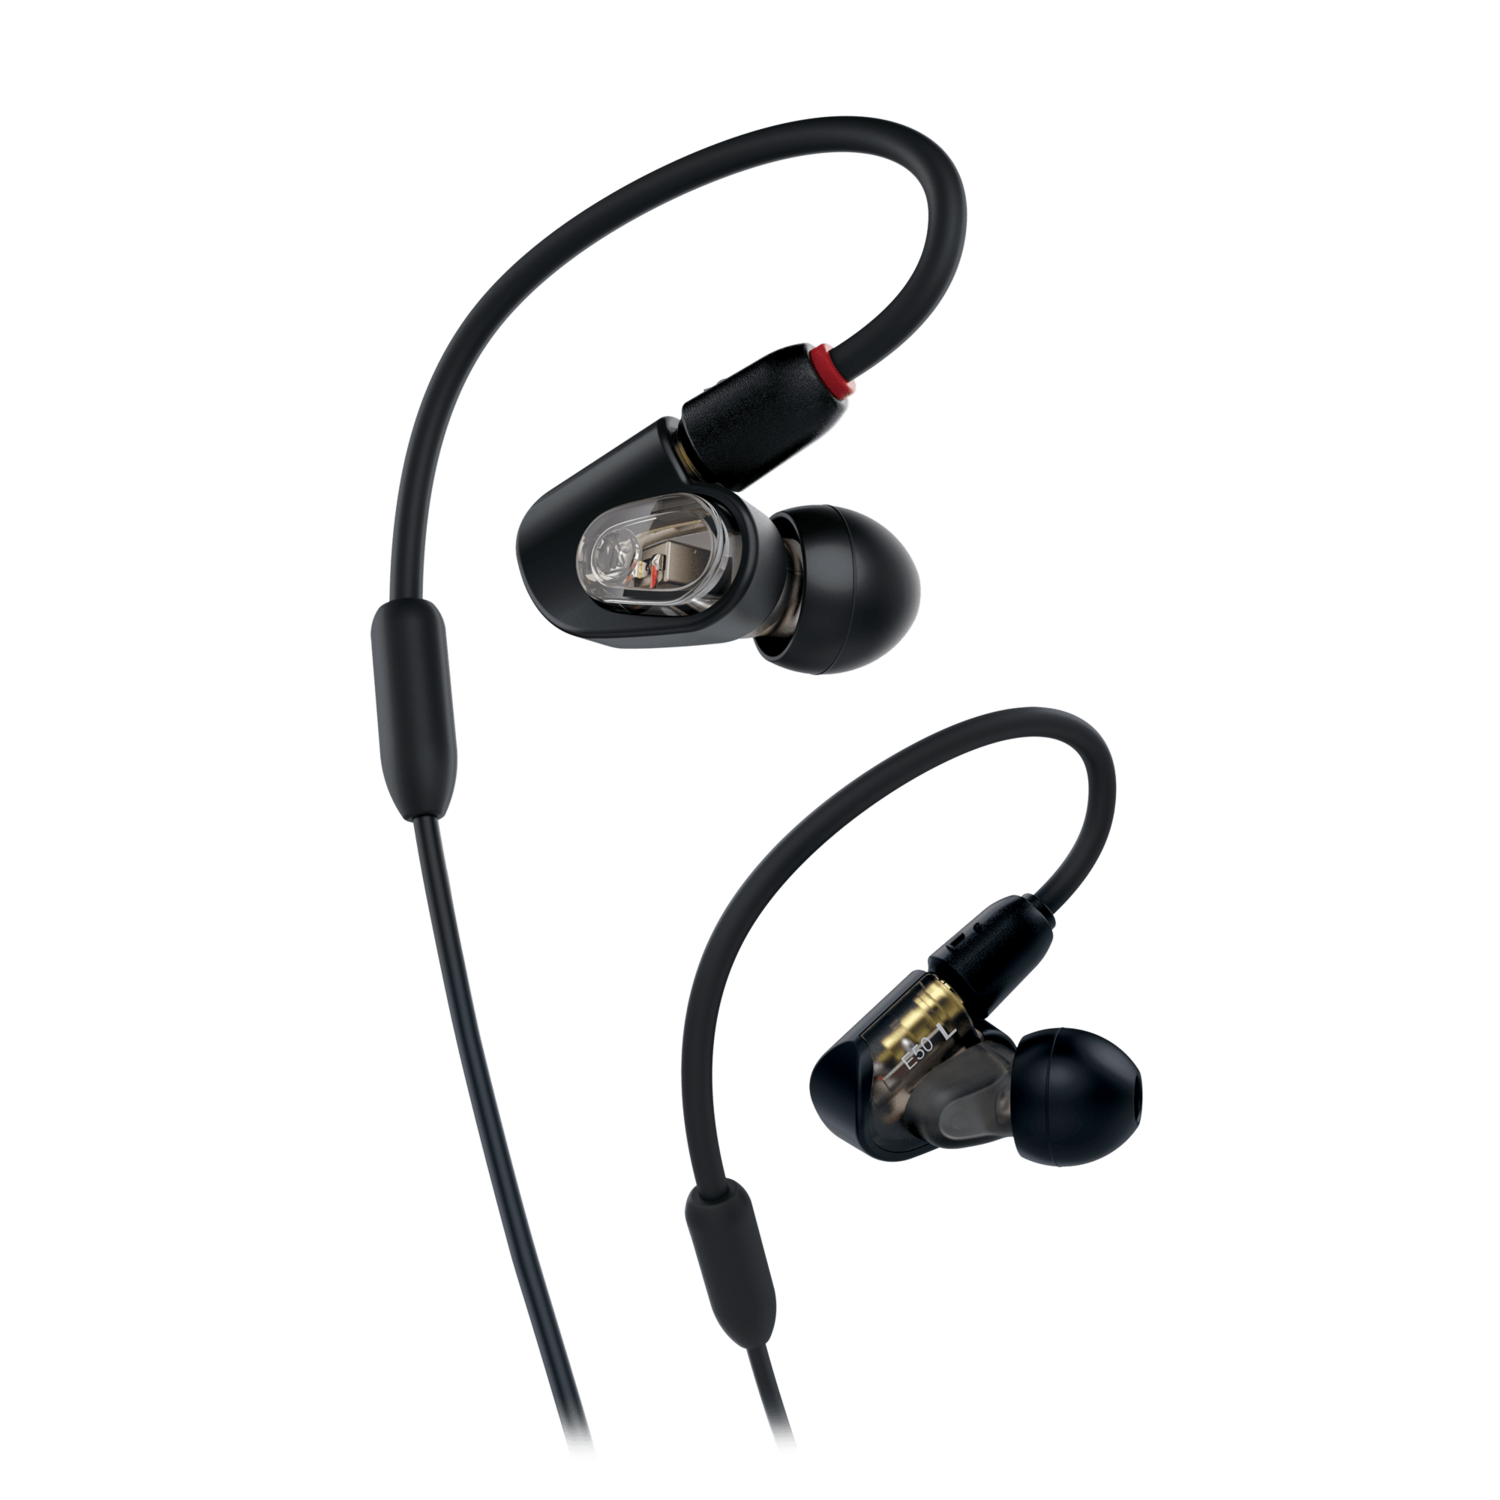 Audio Technica Professional In-Ear Monitor Headphones
ATH-E50